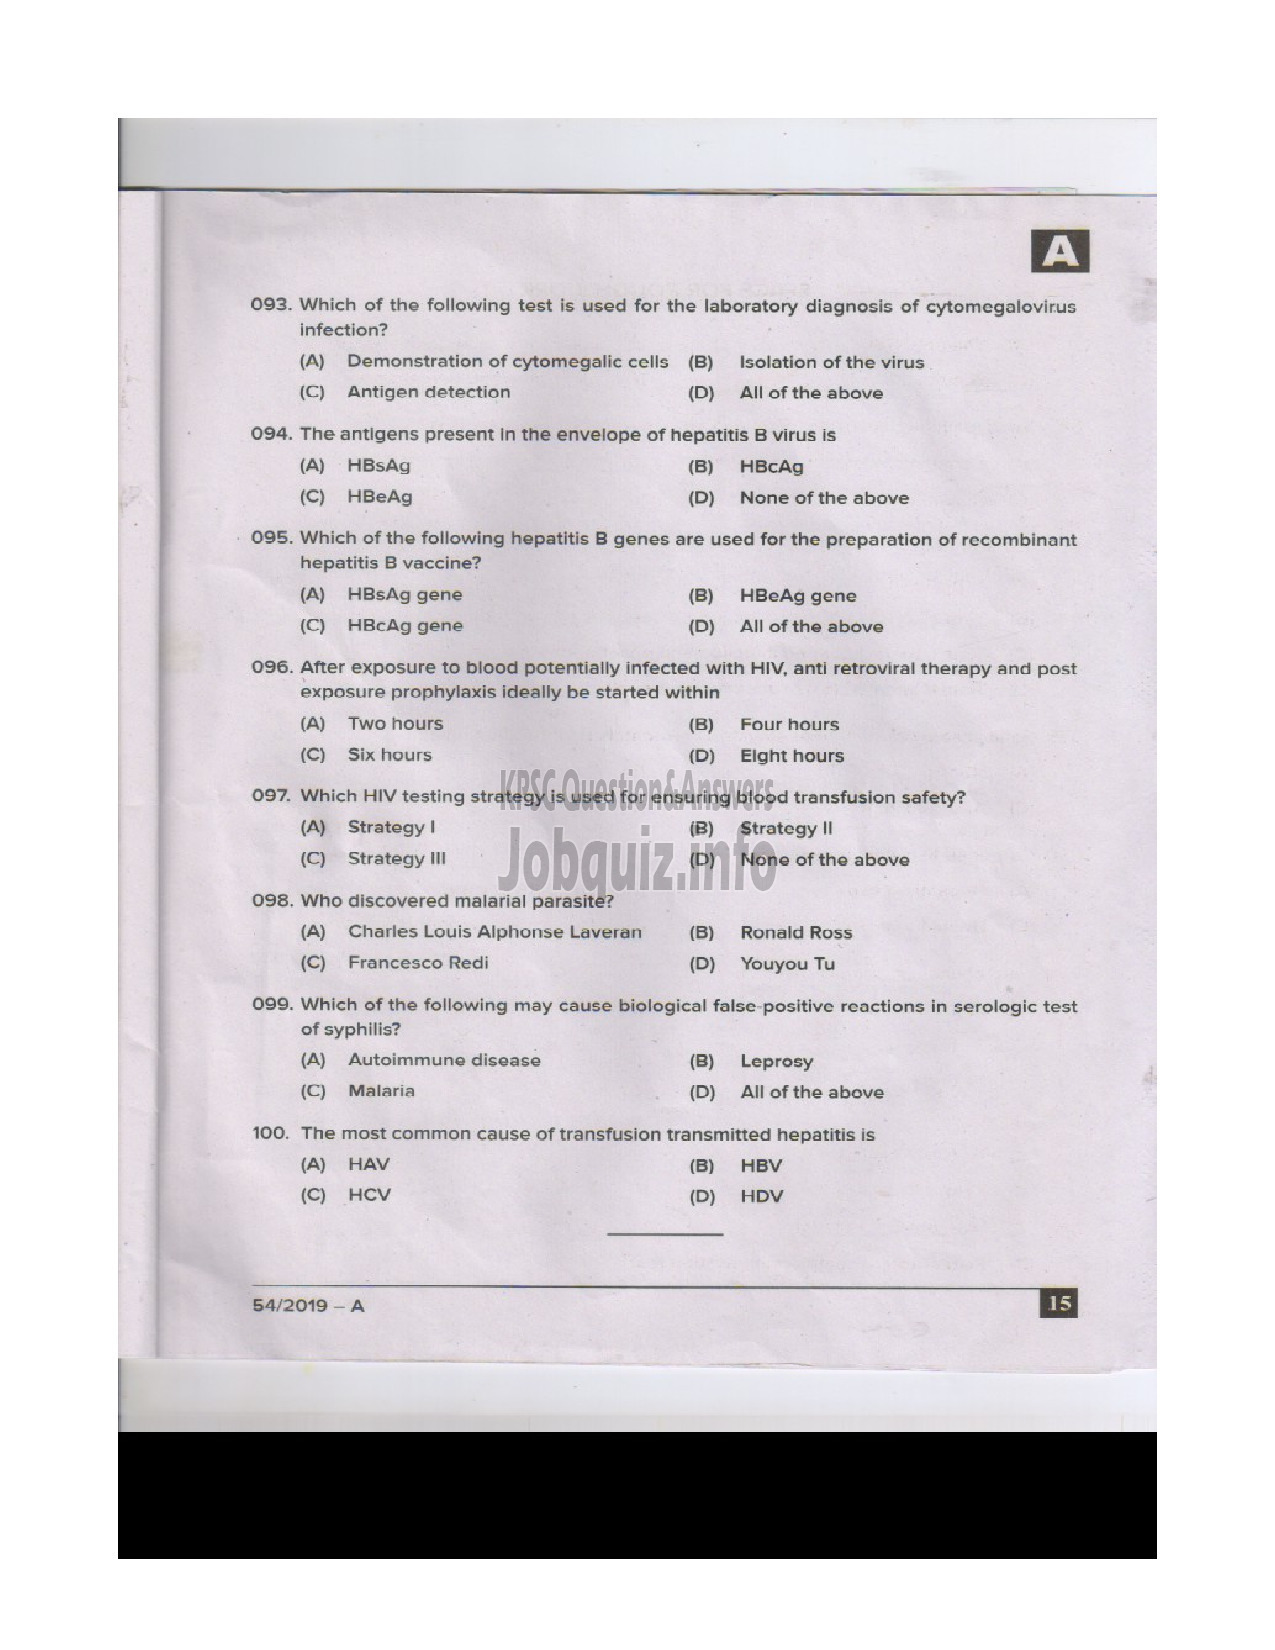 Kerala PSC Question Paper - BLOOD BANK TECHNICIAN HEALTH SERVICES ENGLISH -15